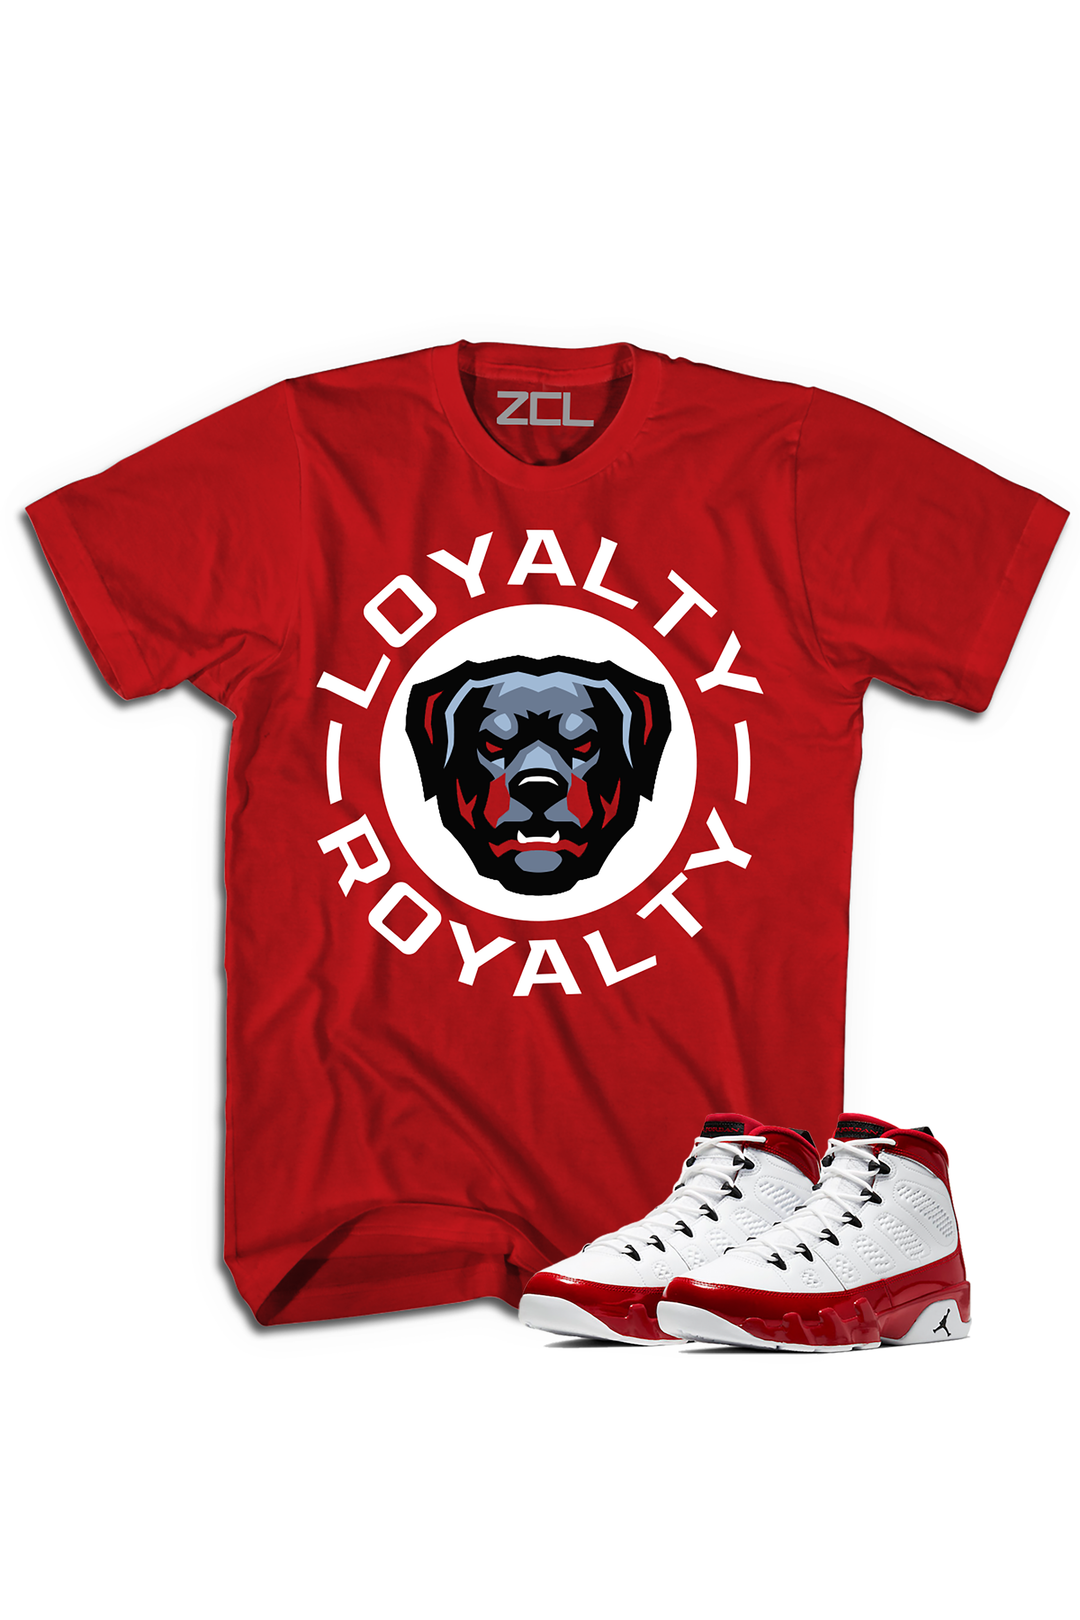 ZCL Loyalty-Royalty "Air Jordan 9 Gym Red" HookUp  Tee Red - Zamage